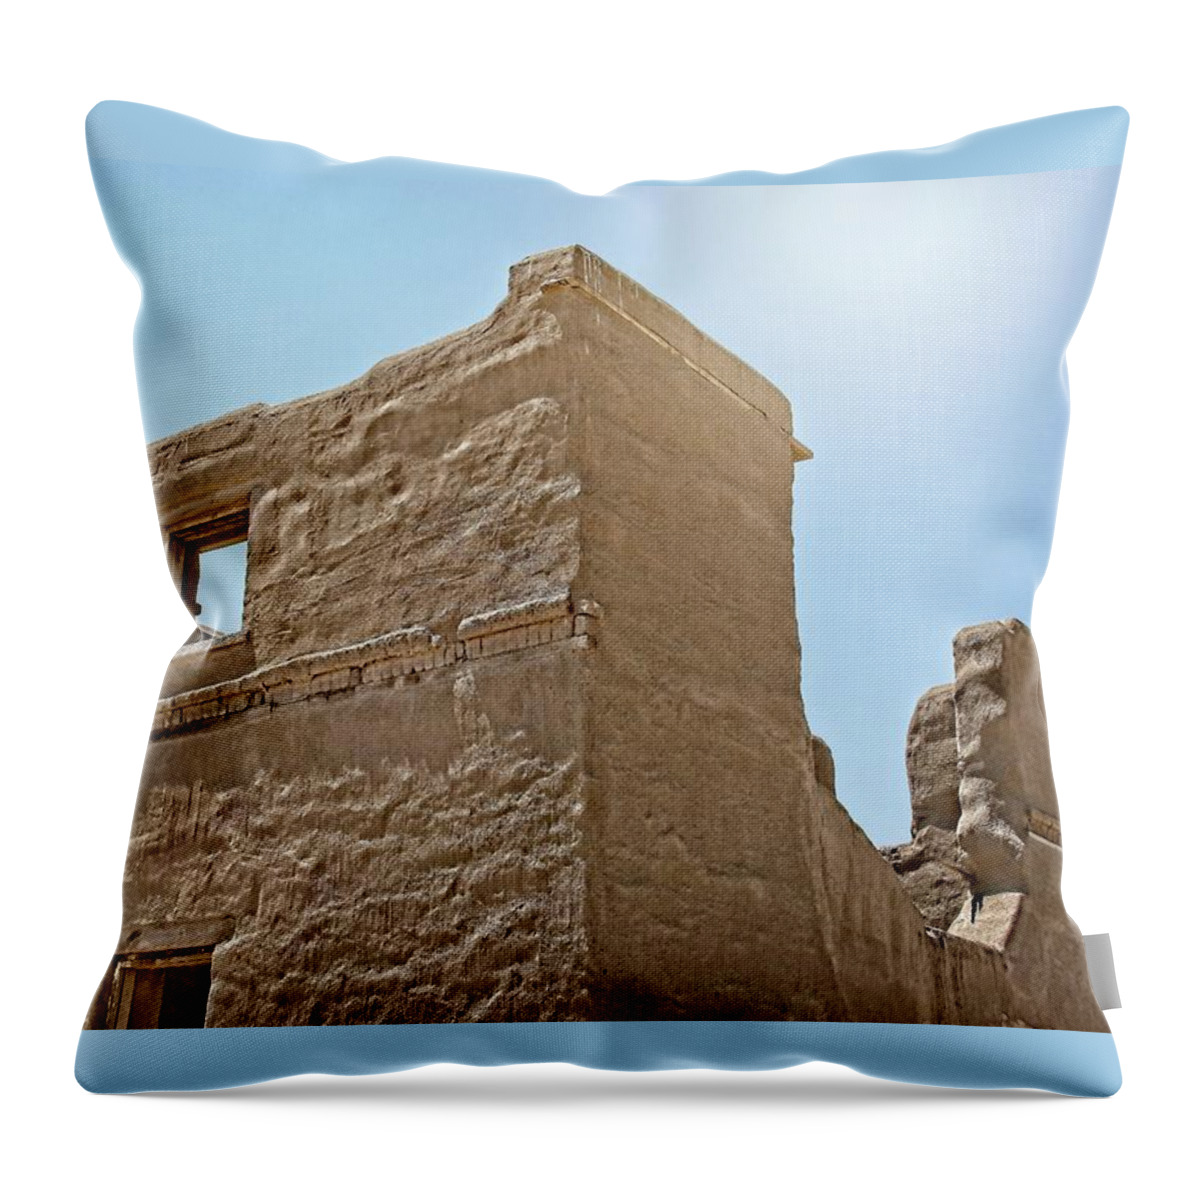 Abandoned Throw Pillow featuring the photograph Broken Walls by David Desautel